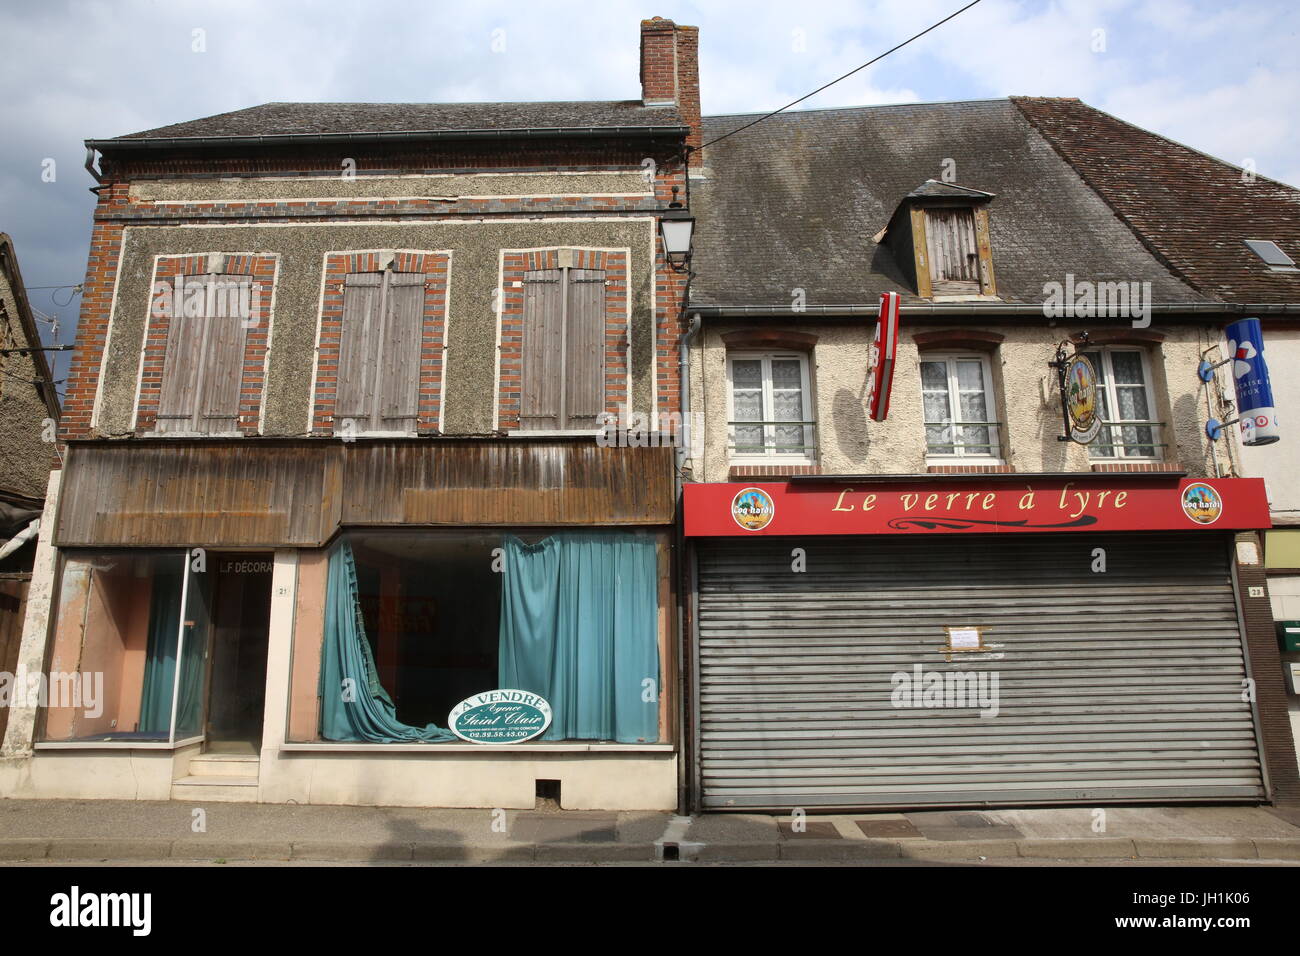 Closed businesses in La Neuve Lyre, Normandy. France. Stock Photo